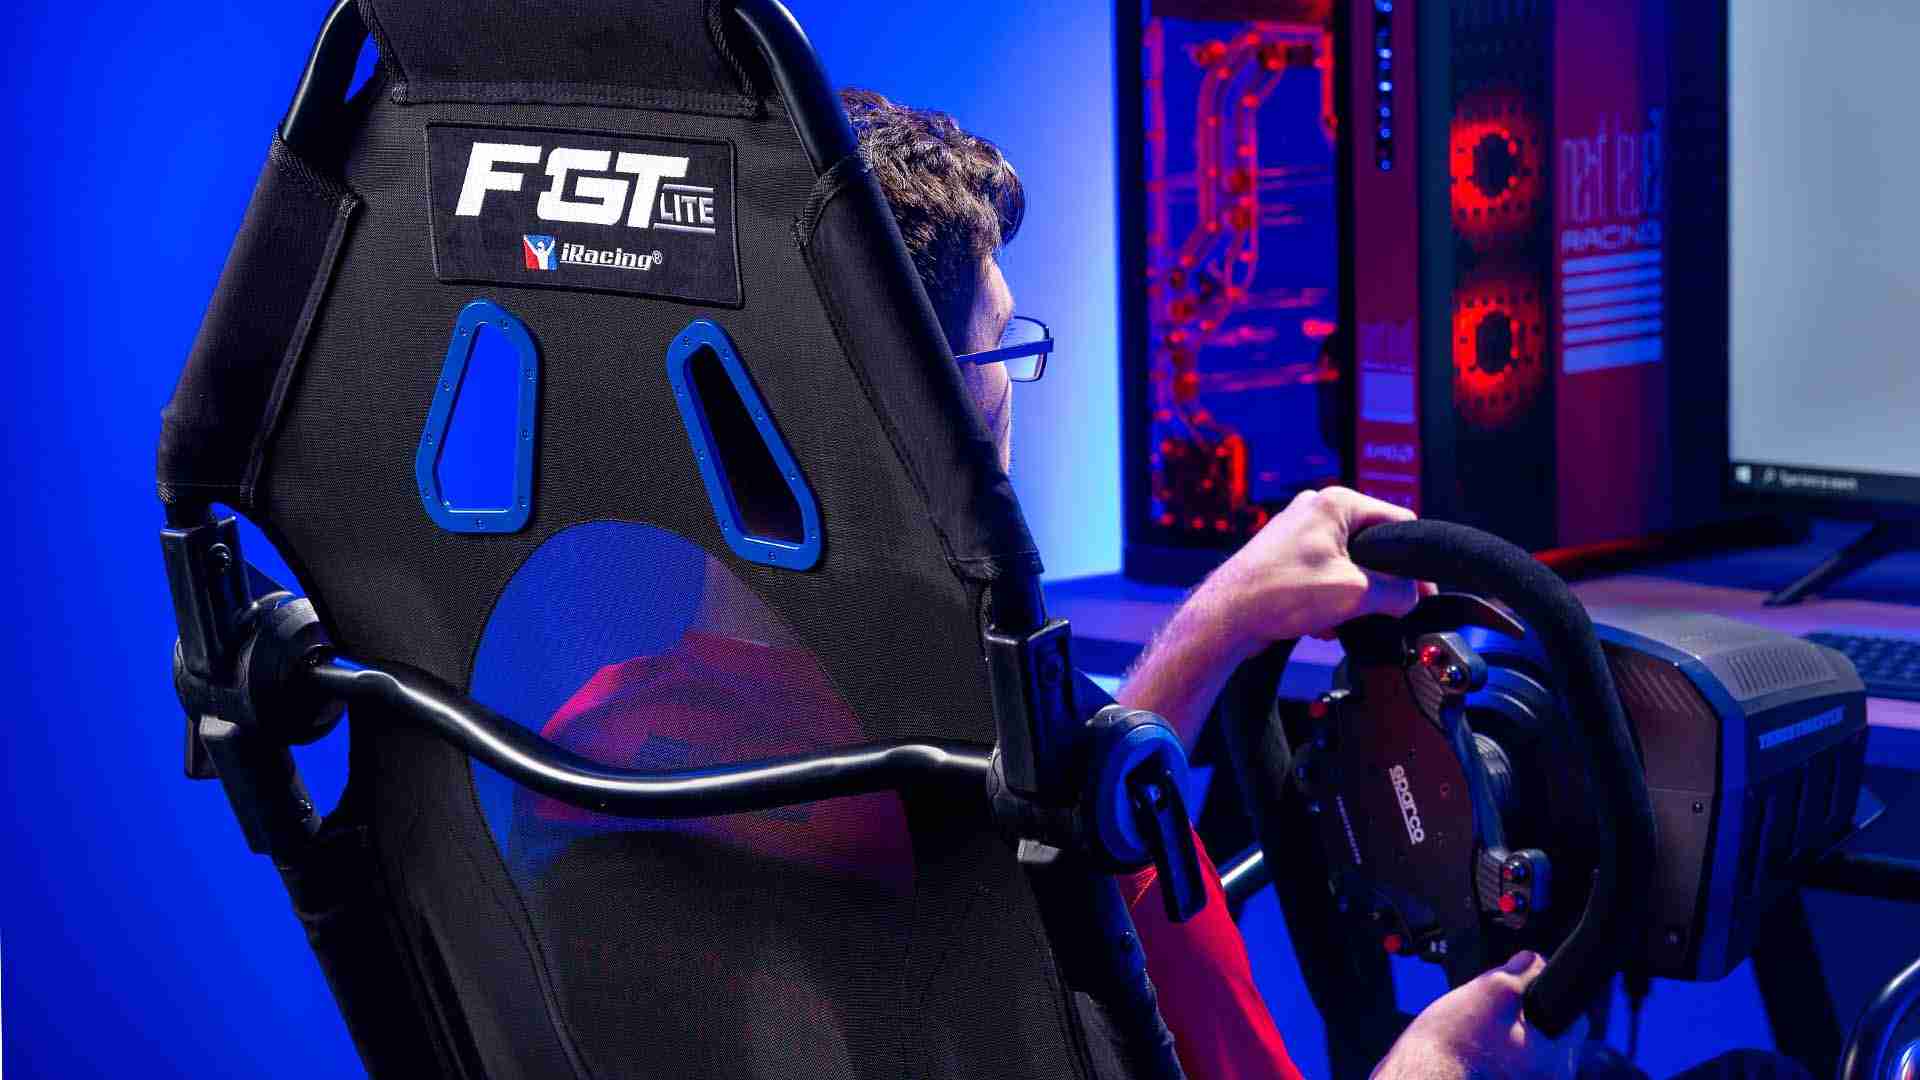 Next Level Racing F-GT Lite Cockpit – Simulation1